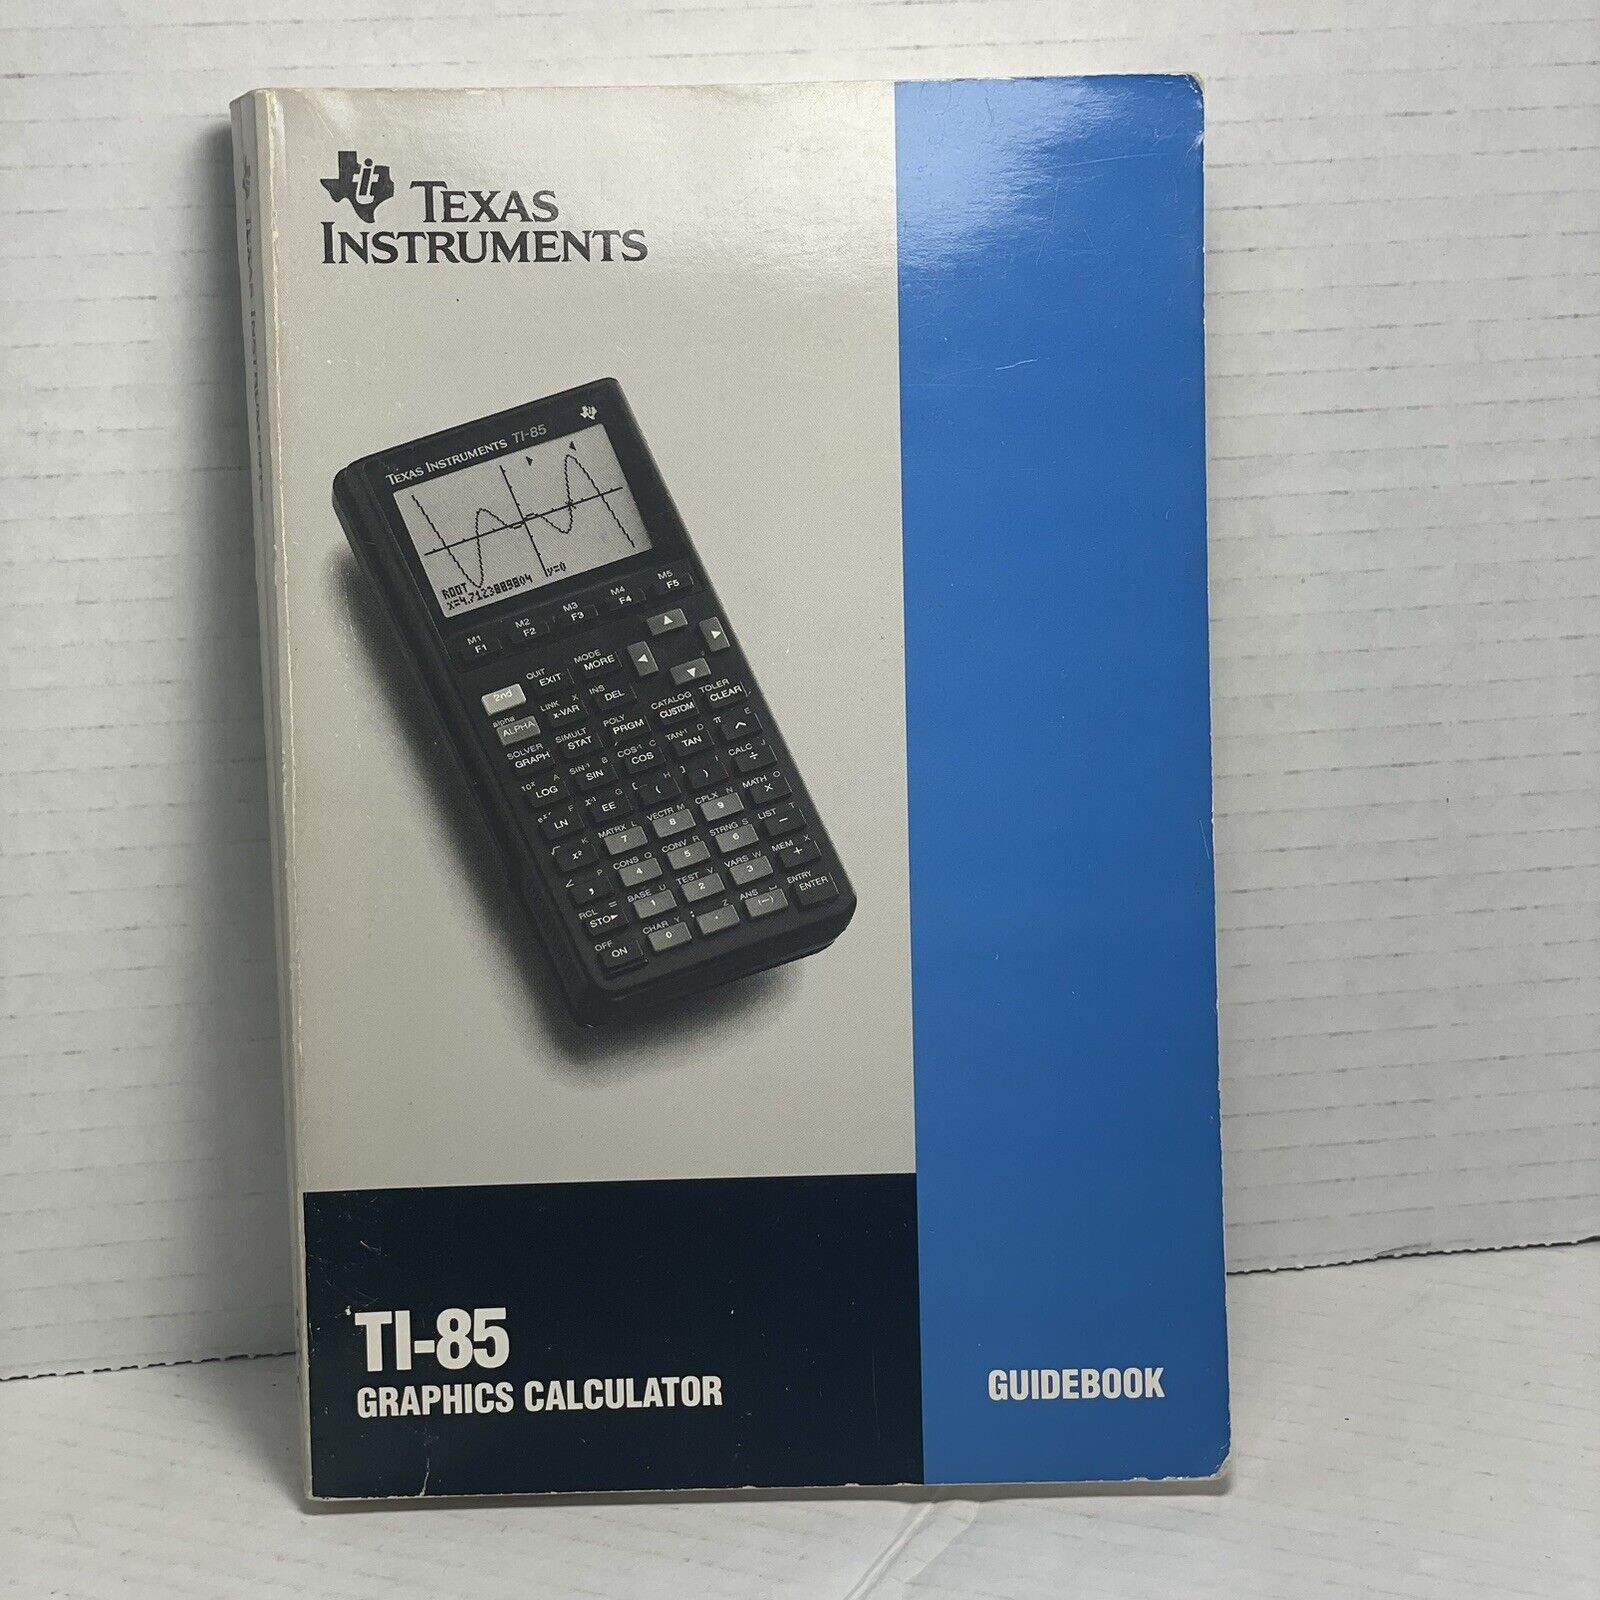 TEXAS INSTRUMENTS TI-85 Graphic Calculator, Guidebook 1069814–0201 ￼G.B. Co.1993